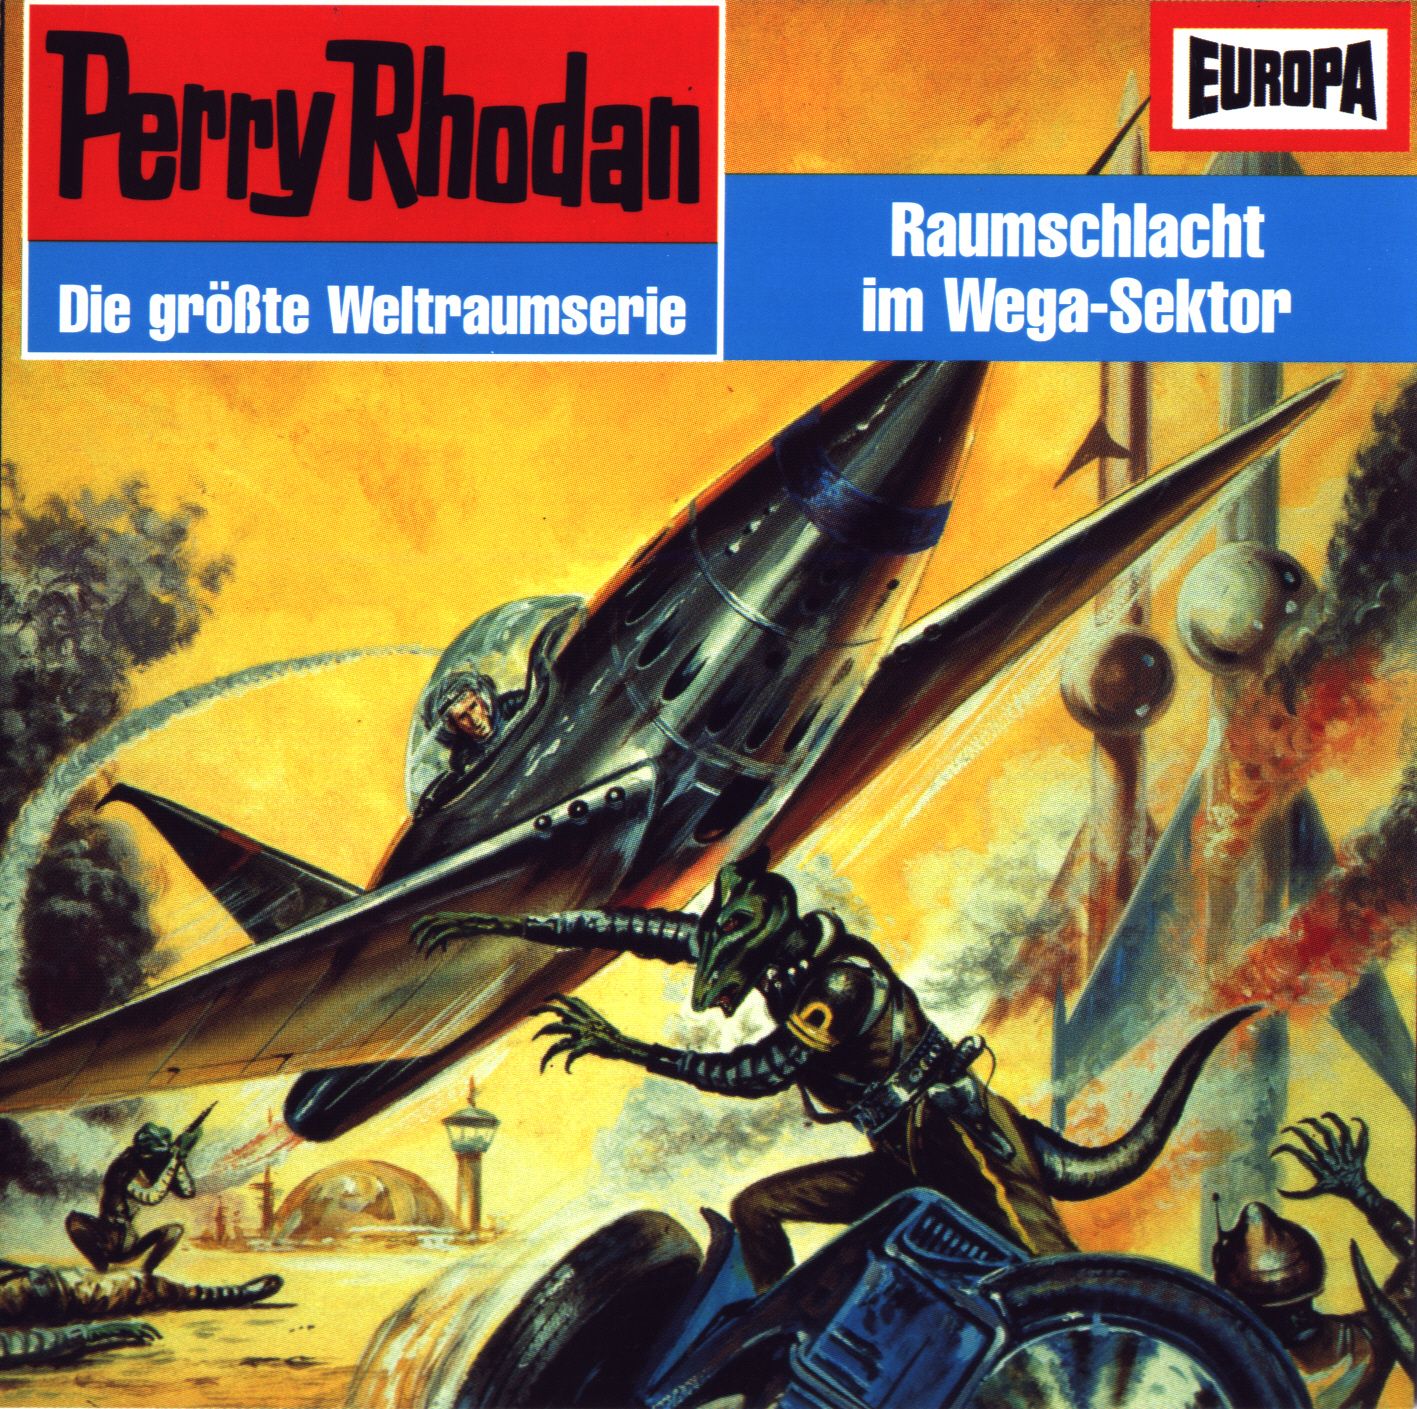 Perry Rhodan - Raumschlacht im Wega-Sektor